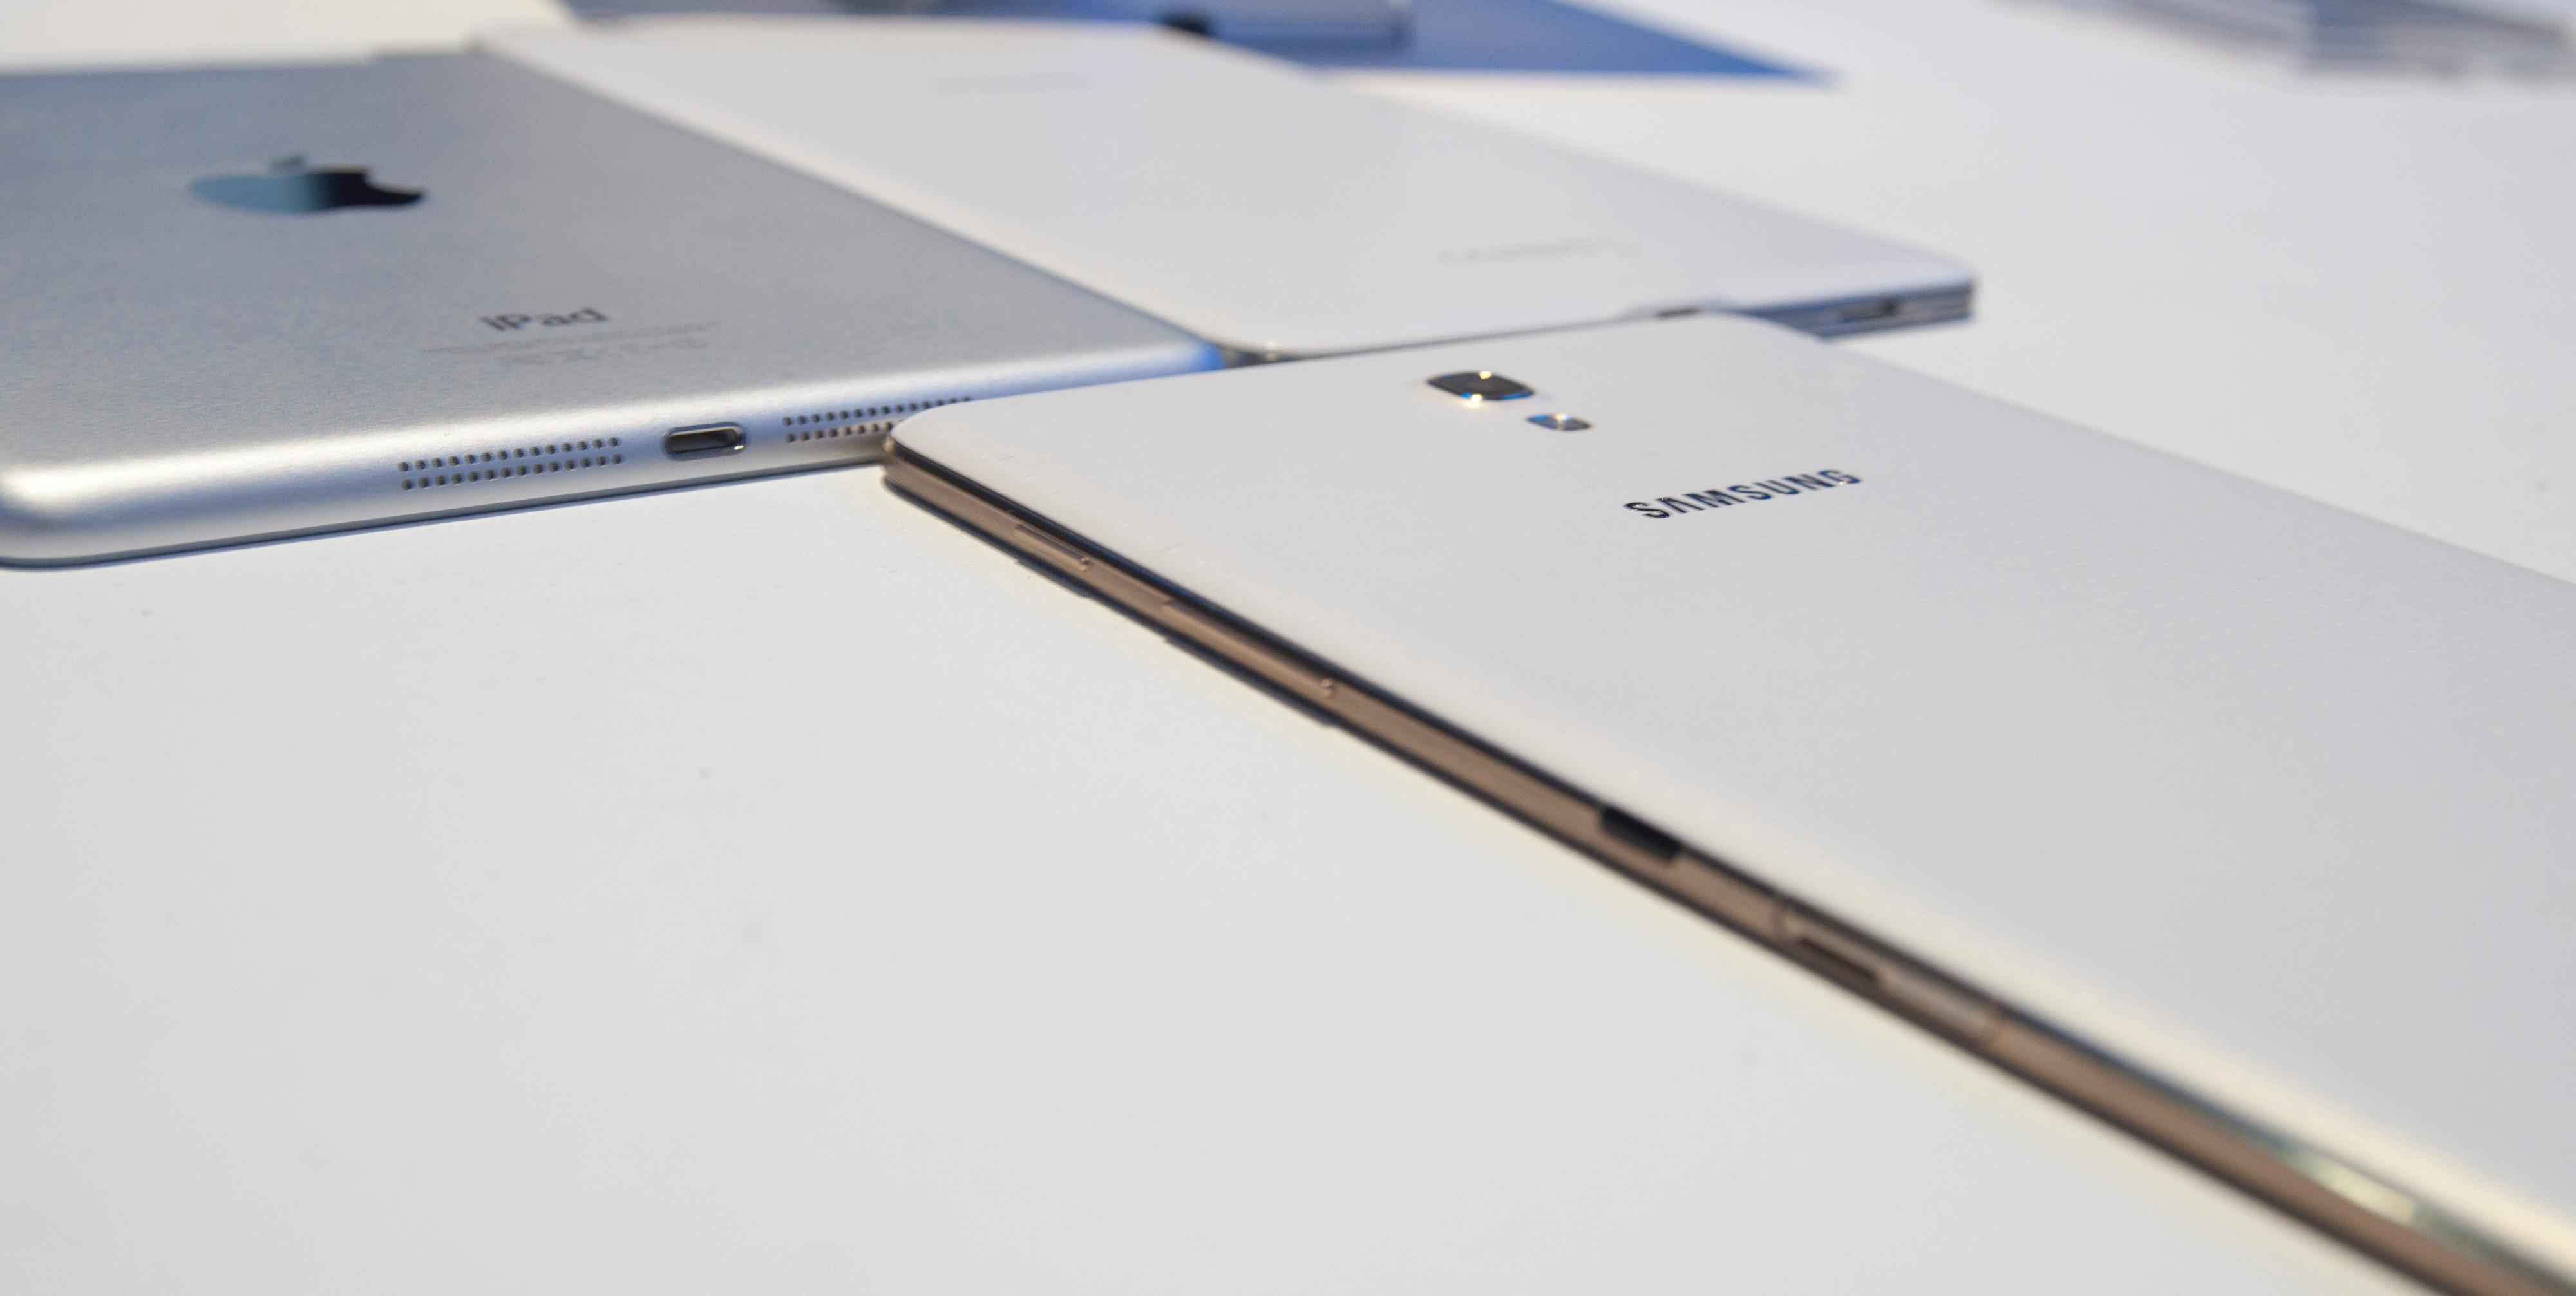 Apples iPad Mini øverst til venstre, Samsung Galaxy TabPRO 8.4 øverst til høyre og Galaxy Tab S 8.4 nederst.Foto: Finn Jarle Kvalheim, Amobil.no